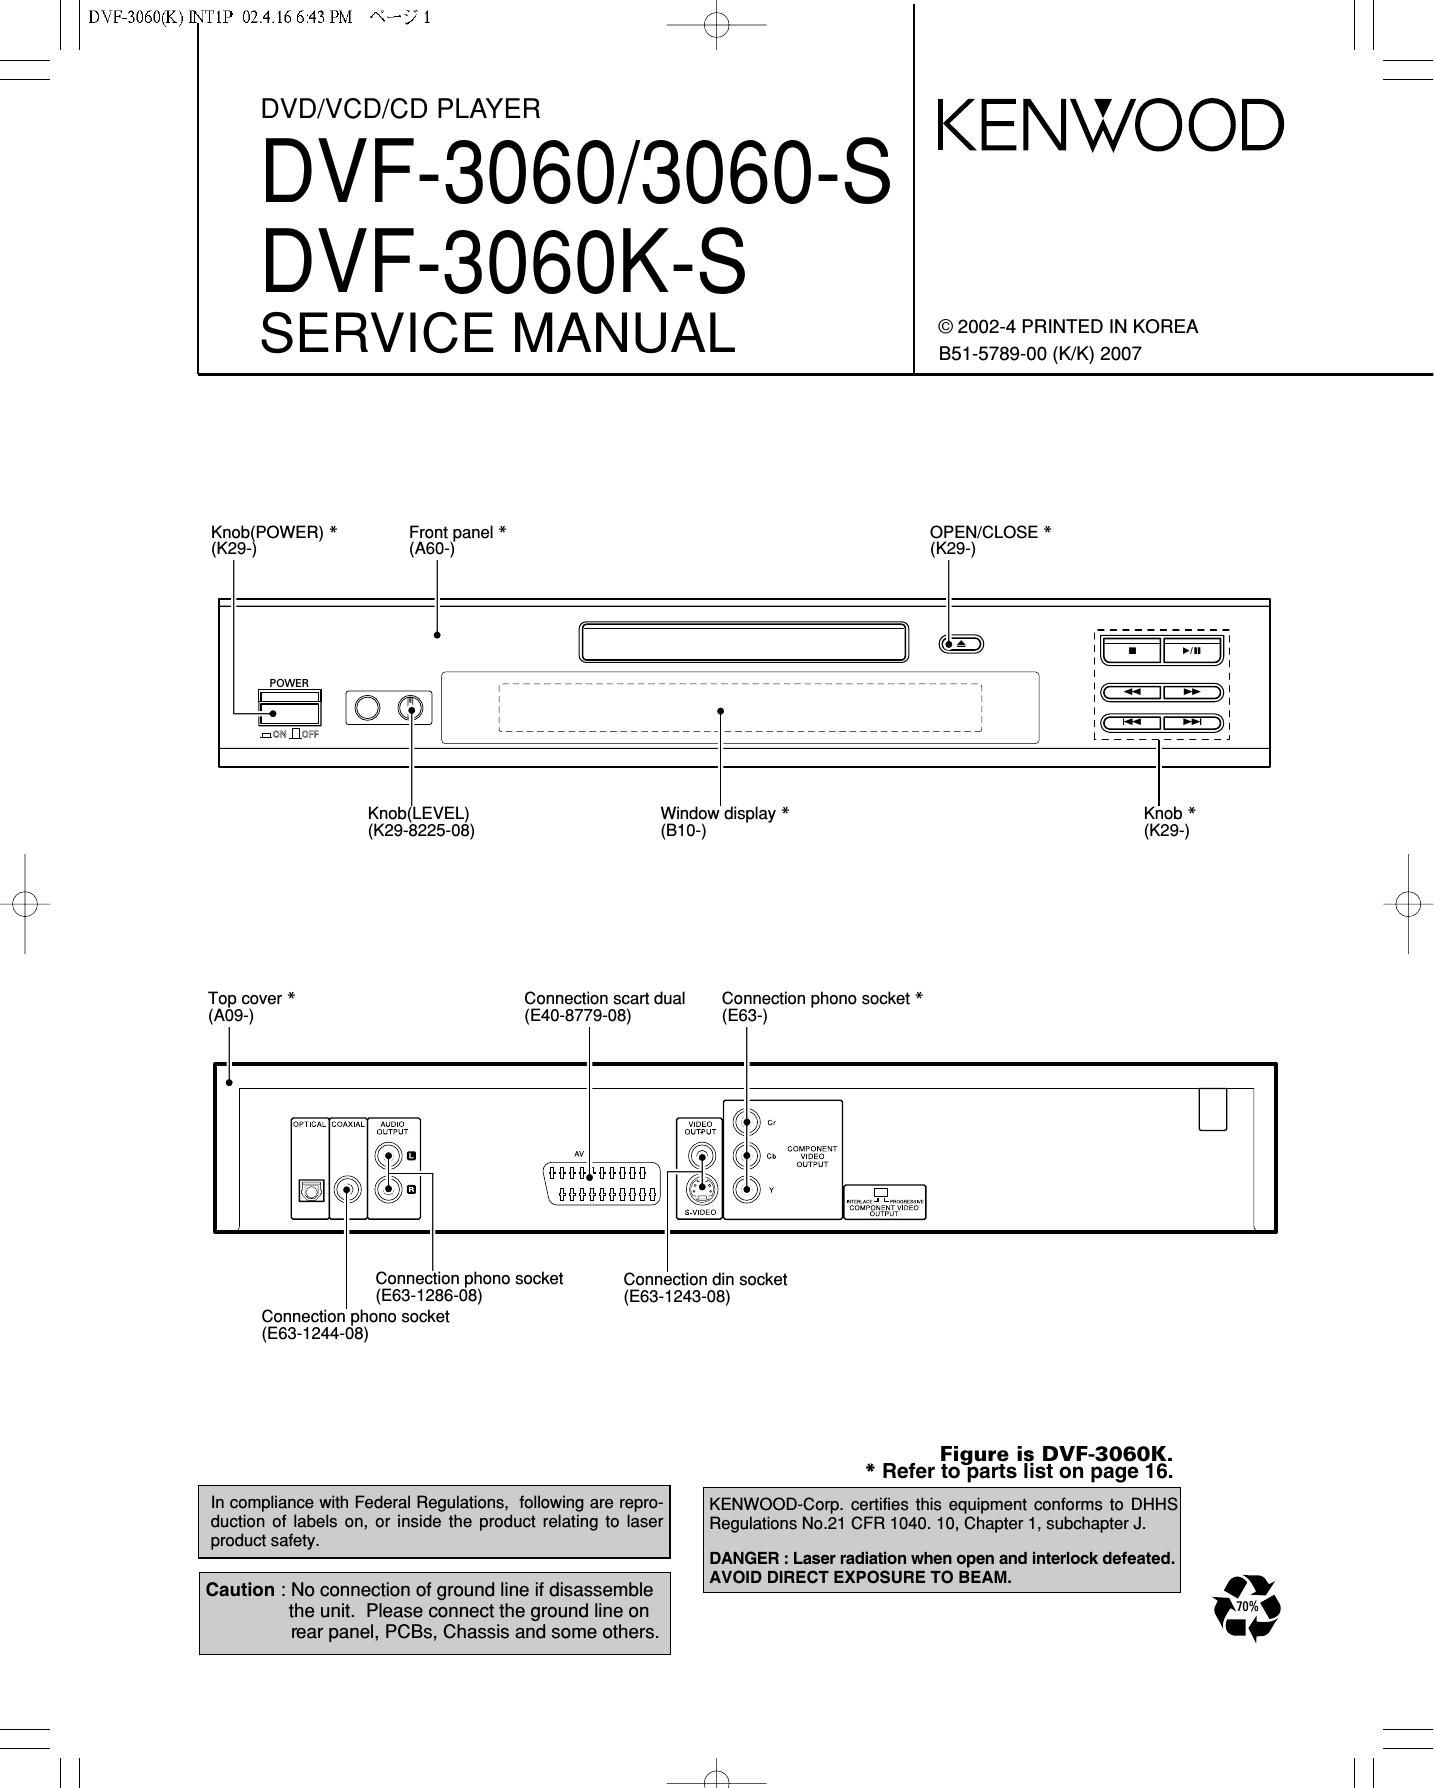 Kenwood DVF 3060 KS Service Manual